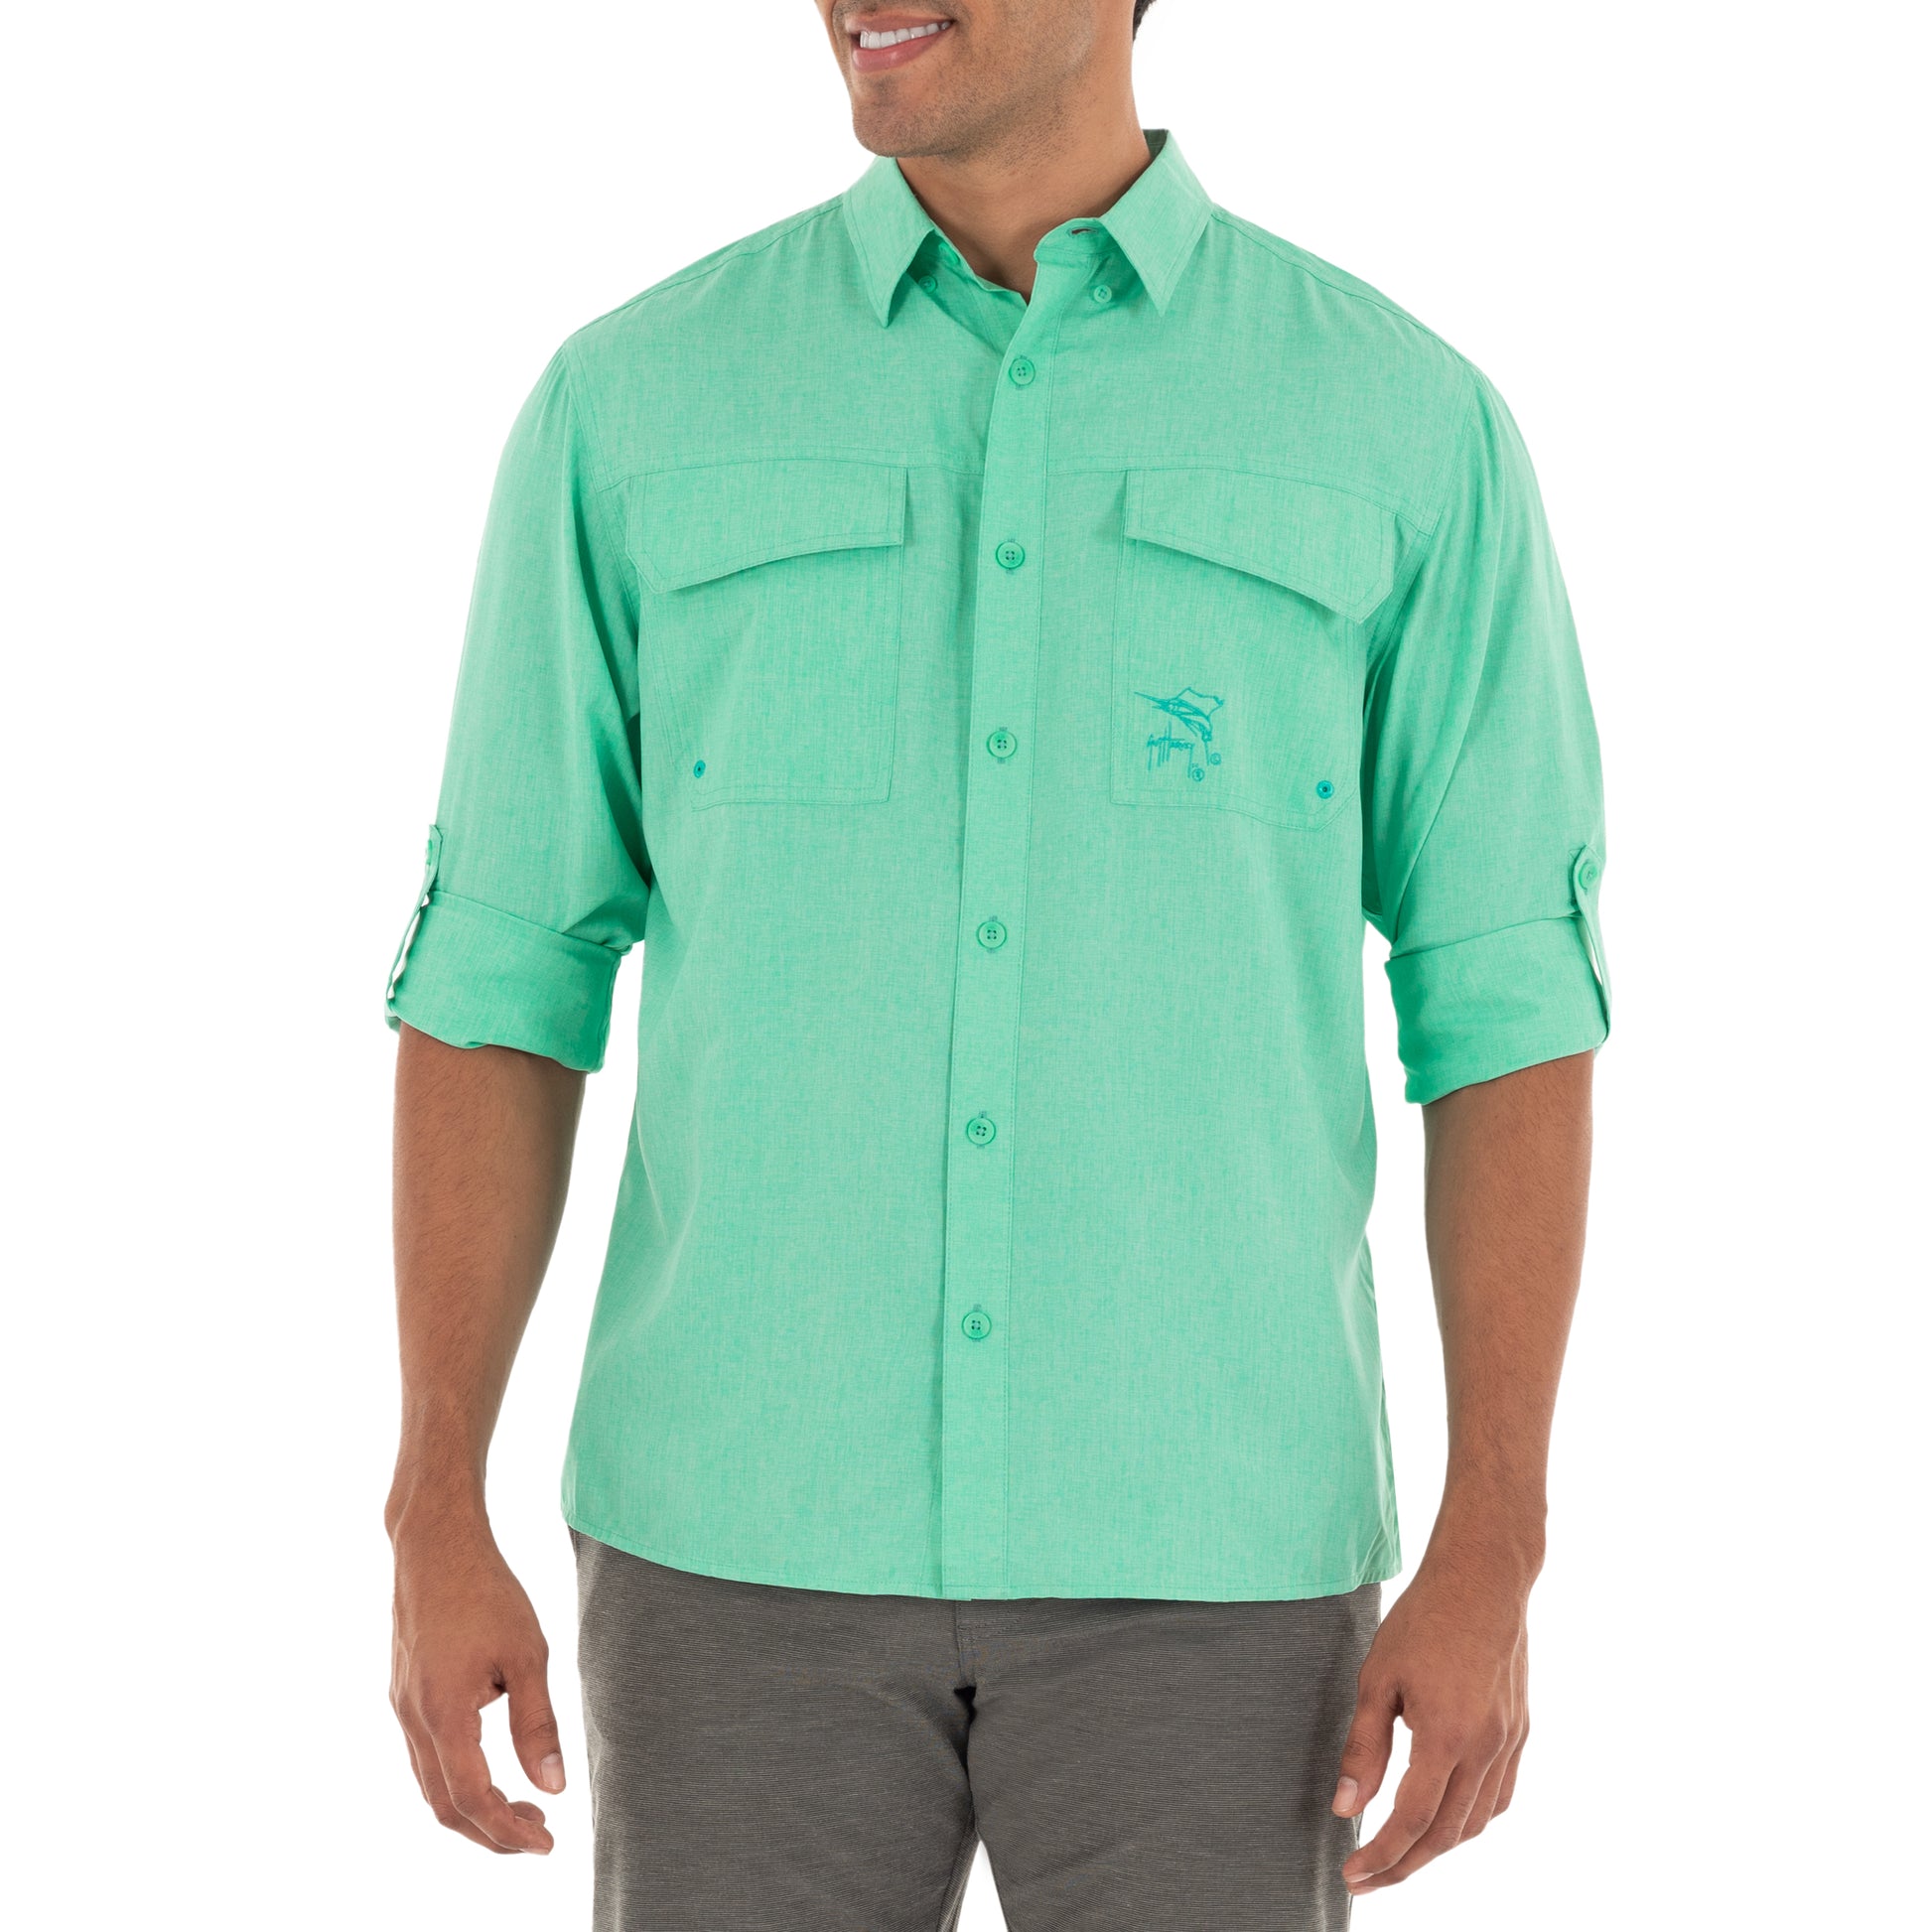 Men's Long Sleeve Heather Textured Cationic Green Fishing Shirt View 4